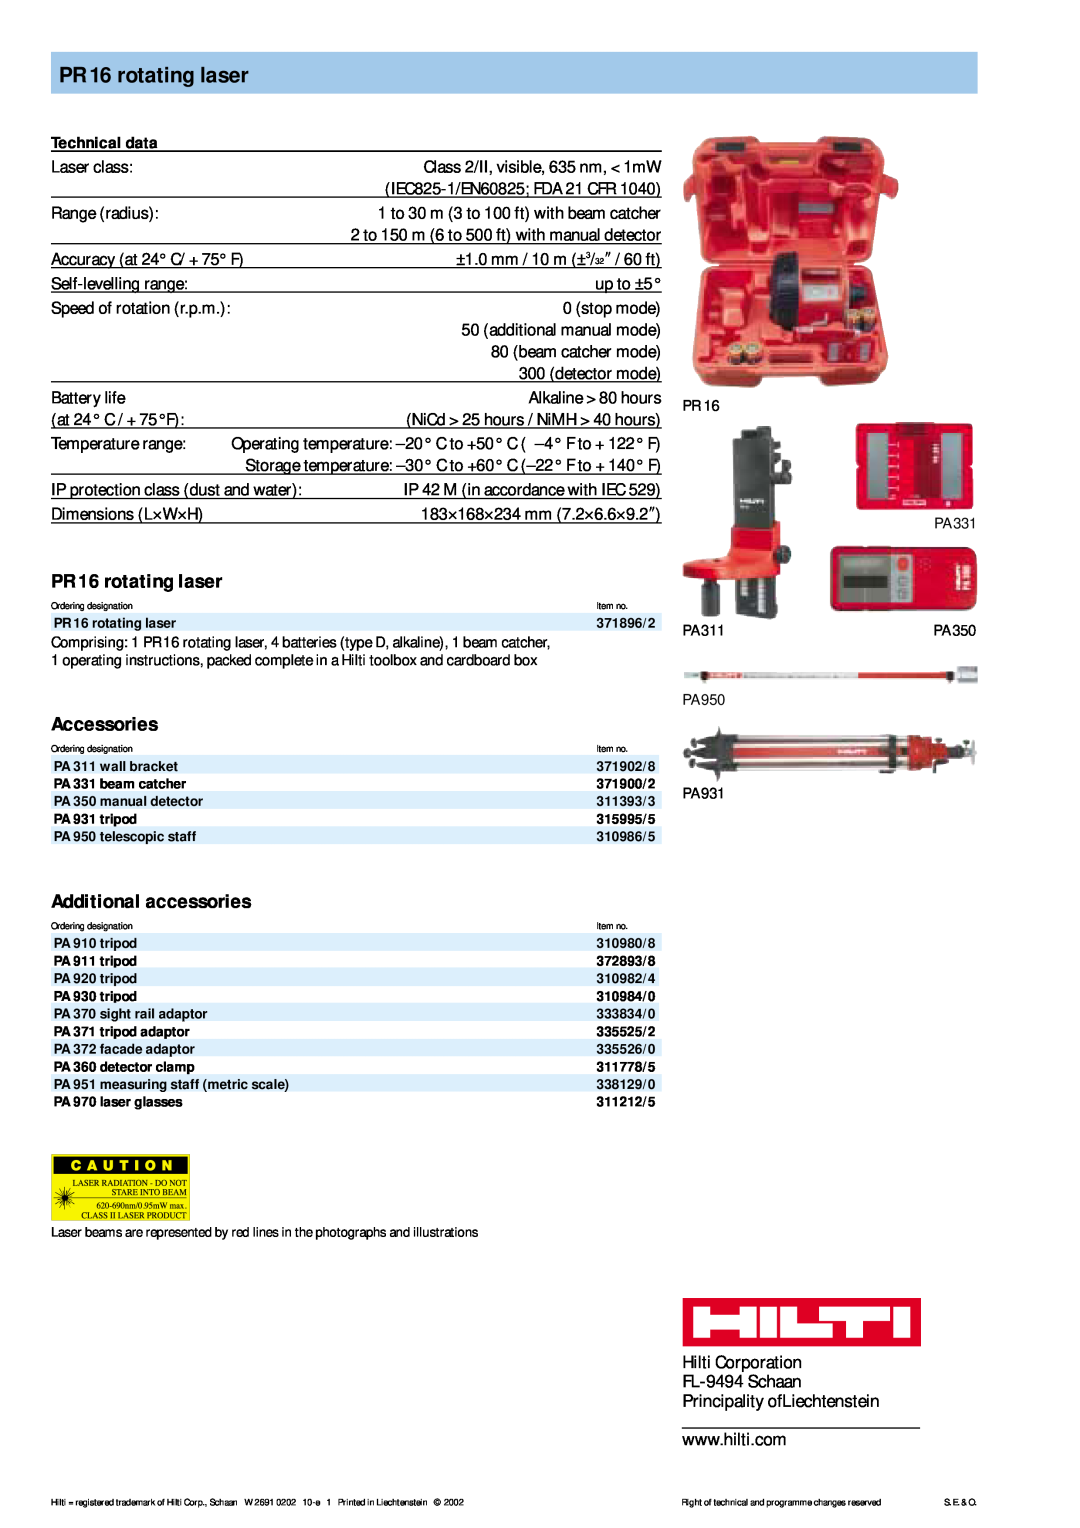 Hilti manual PR 16 rotating laser, Accessories, Additional accessories, Technical data, Hilti Corporation 